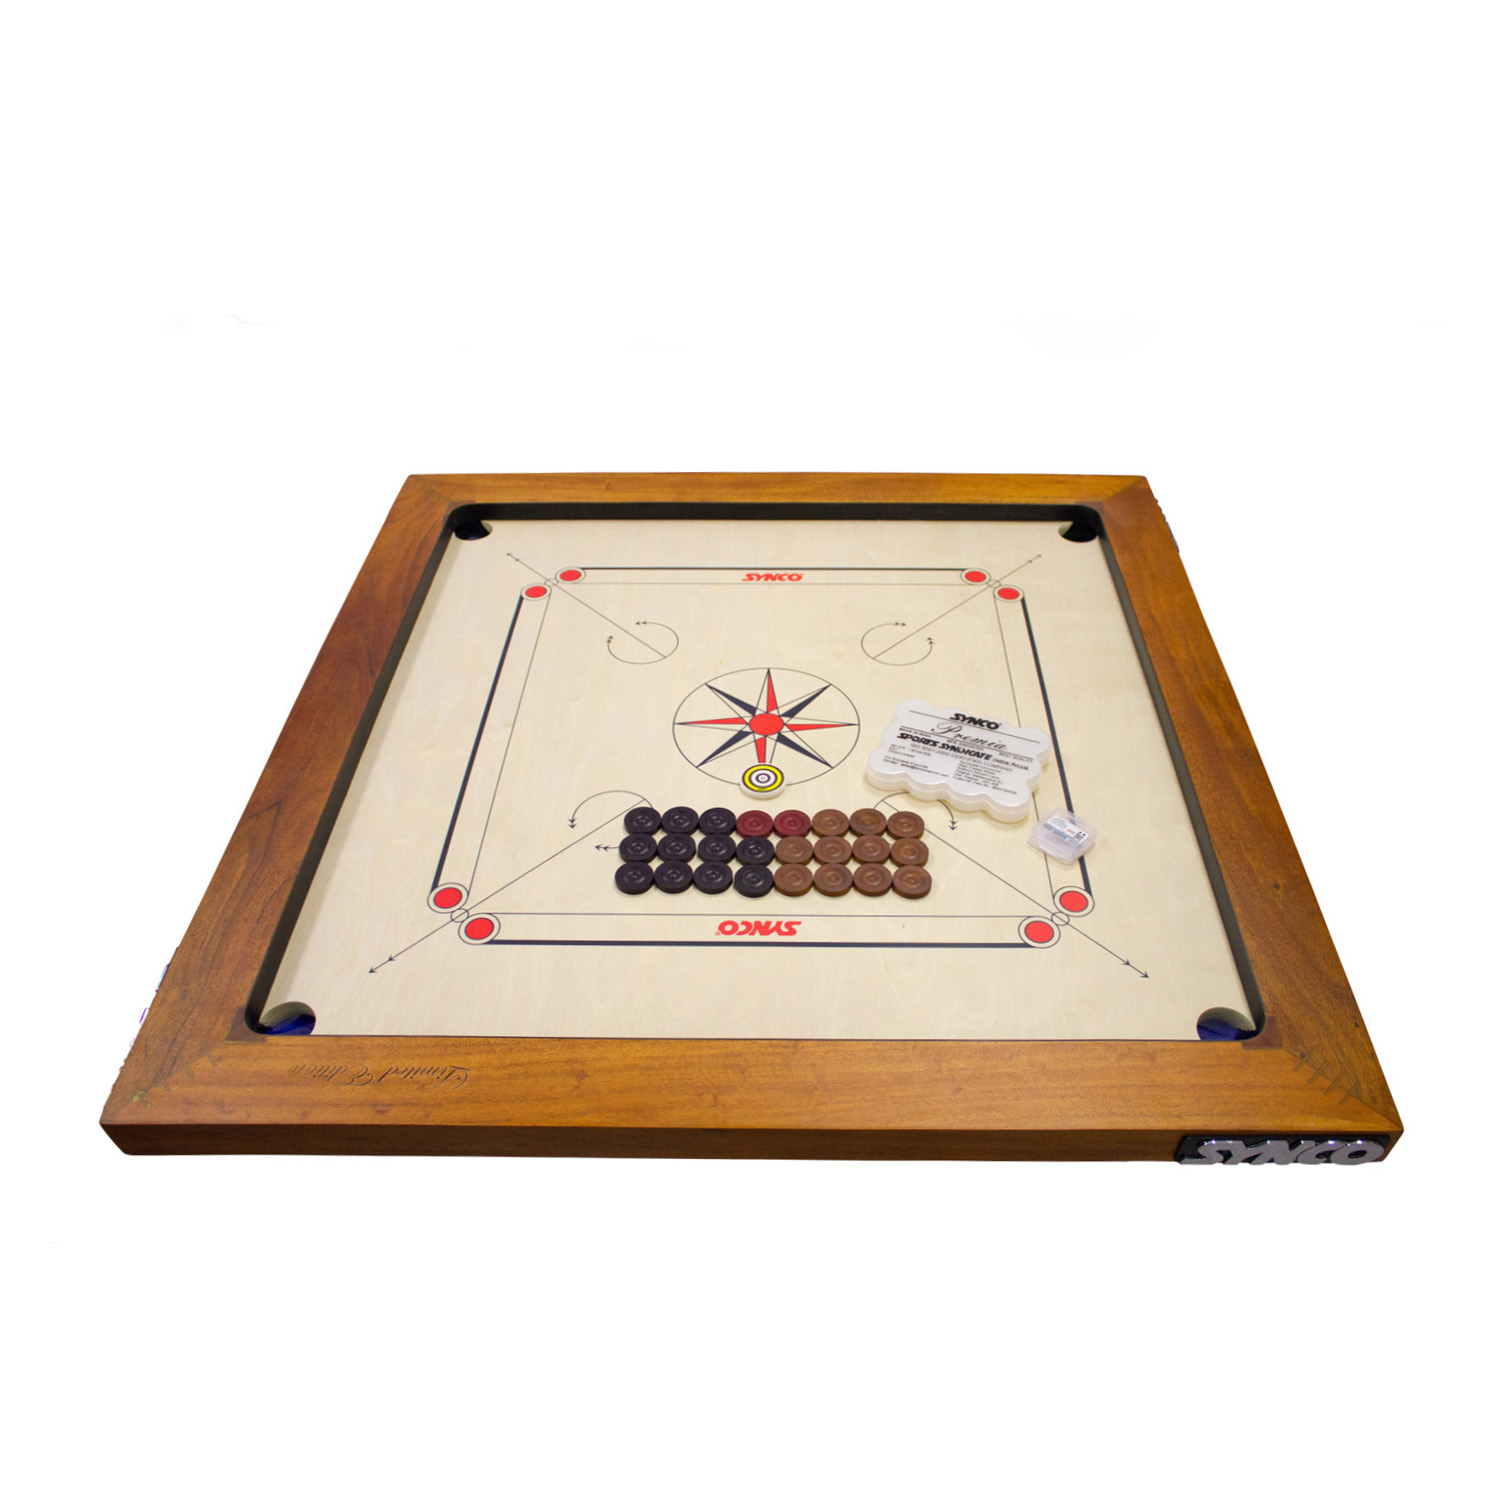 Carrom Board Synco Professional Turnier 74x74 Spielfäche Limited Edition- 2990